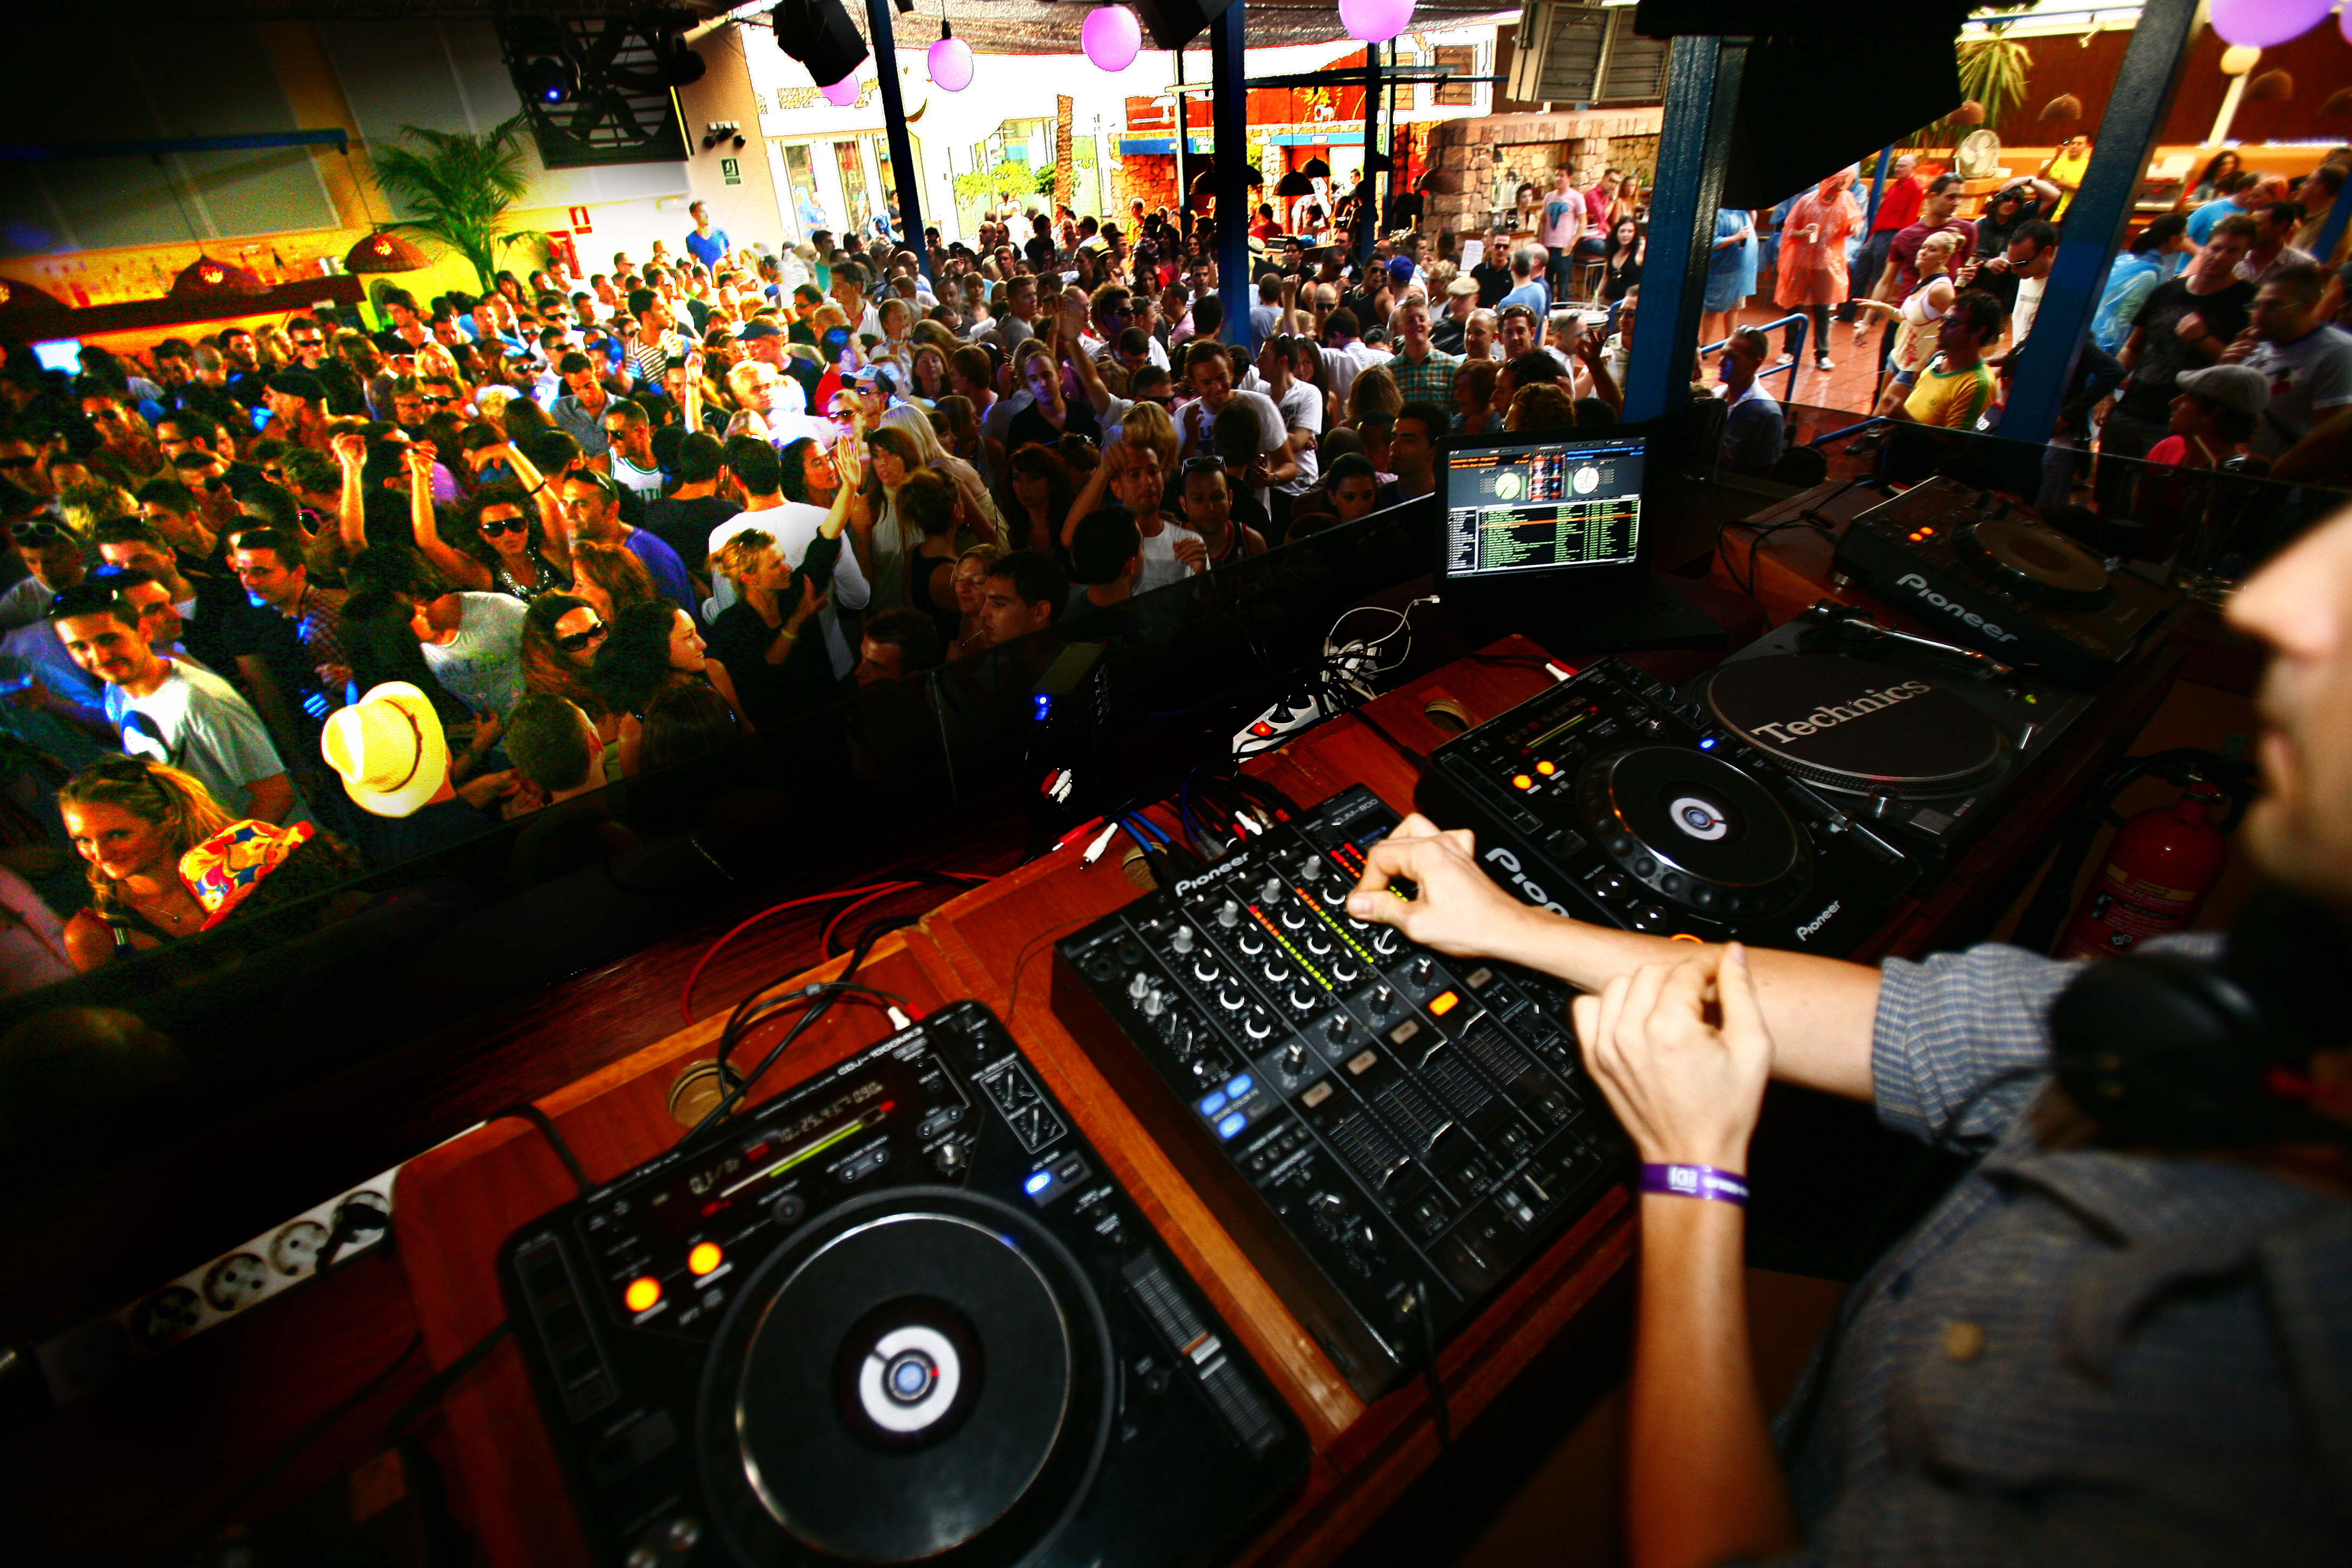 The electronic musics in Ibiza